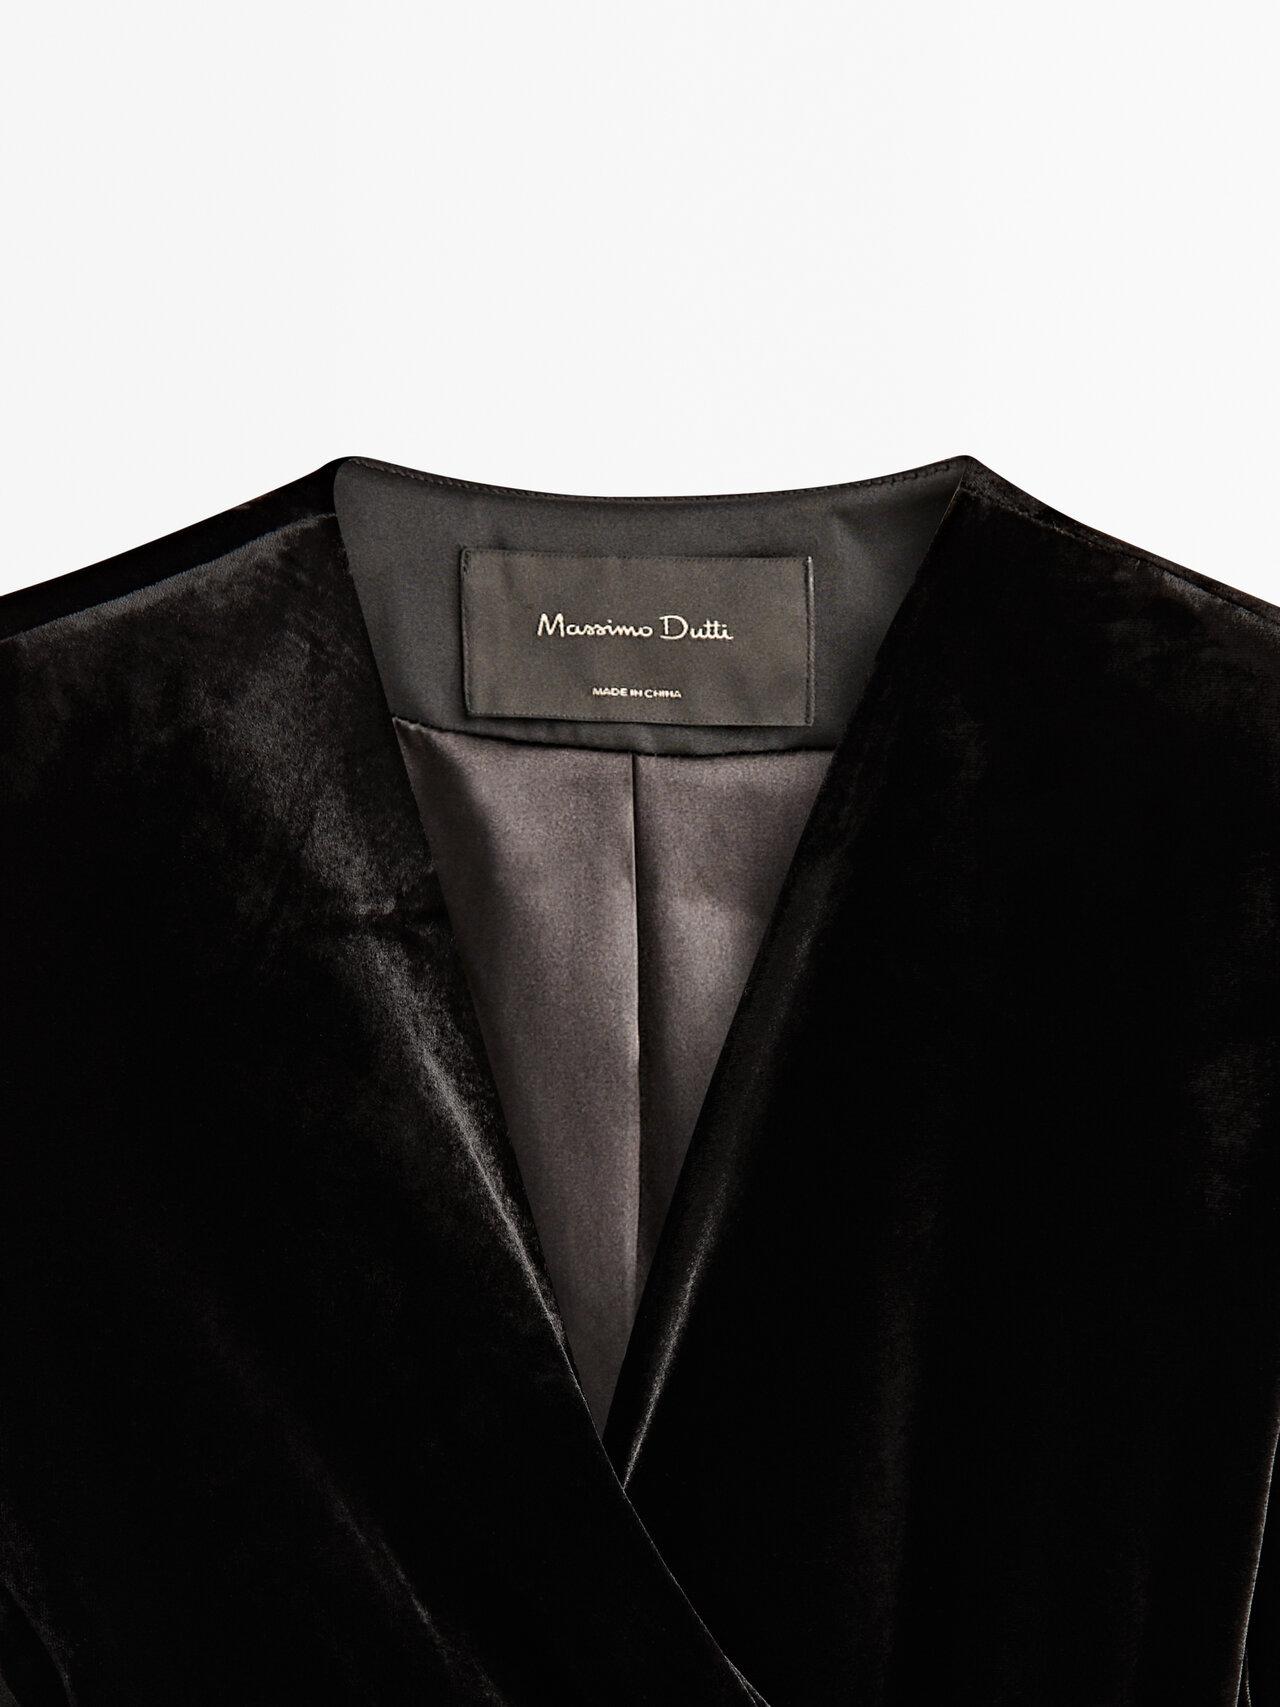 MASSIMO DUTTI Velvet Blazer With Tie Detail in Black | Lyst